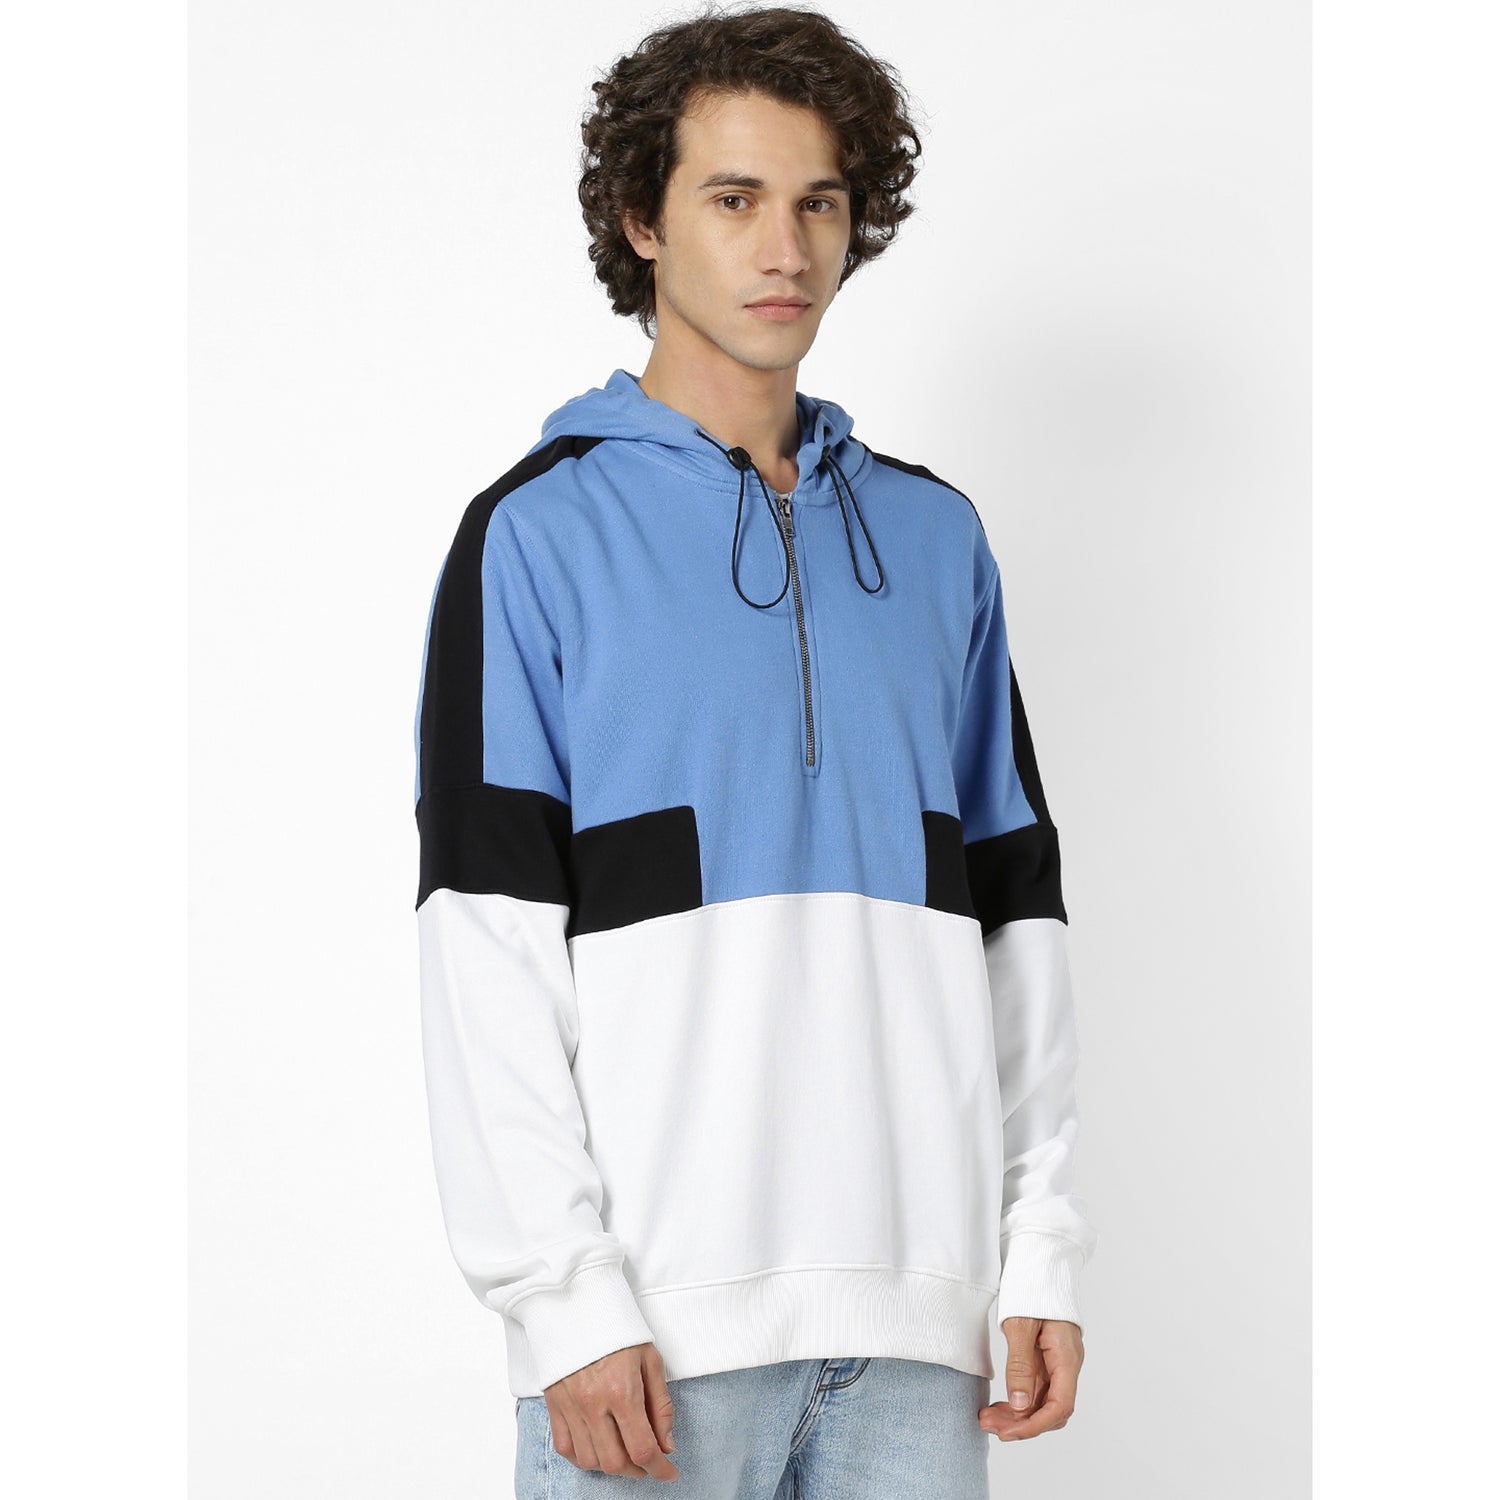 White and Blue Colourblocked Hooded Sweatshirt (SEBANDITIN)